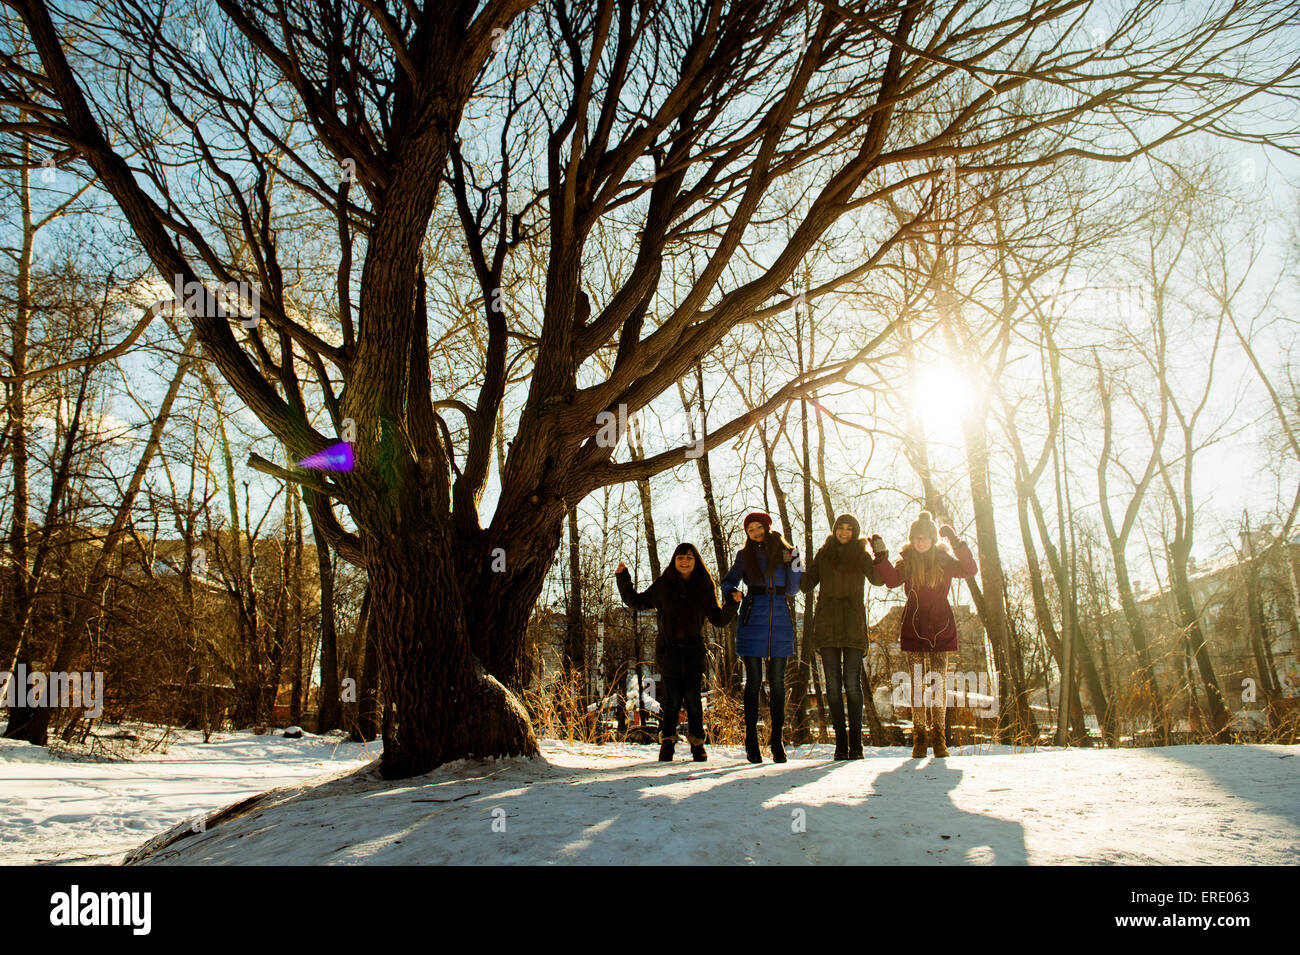 Caucasian girls standing neat tree in snowy field Stock Photo